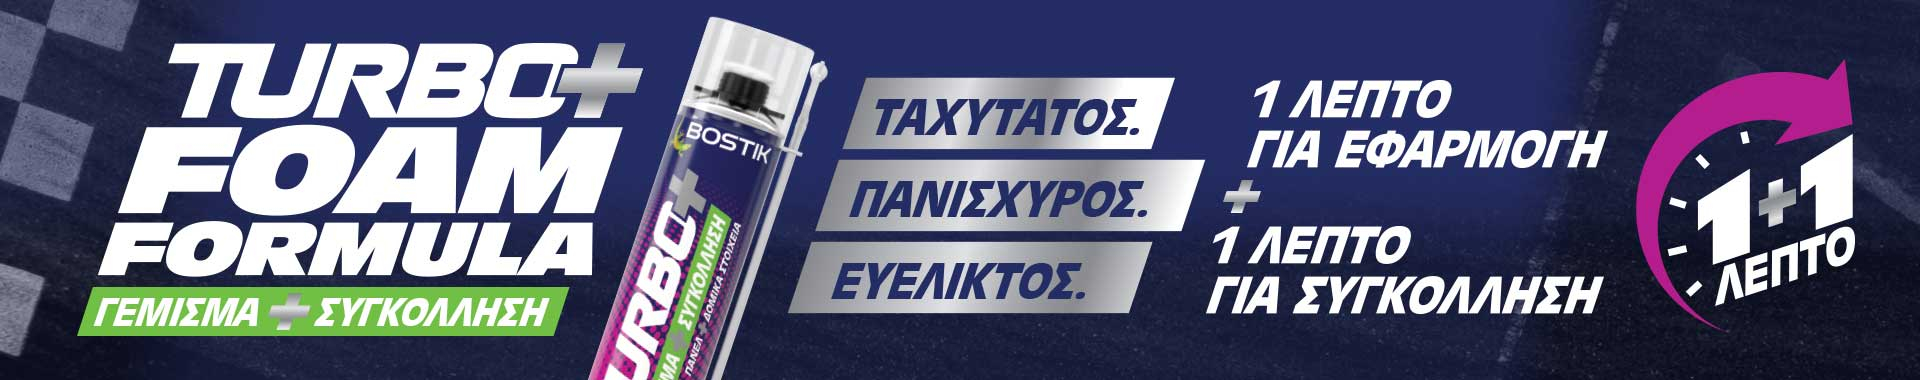 Bostik DIY Greece Turbo banner image